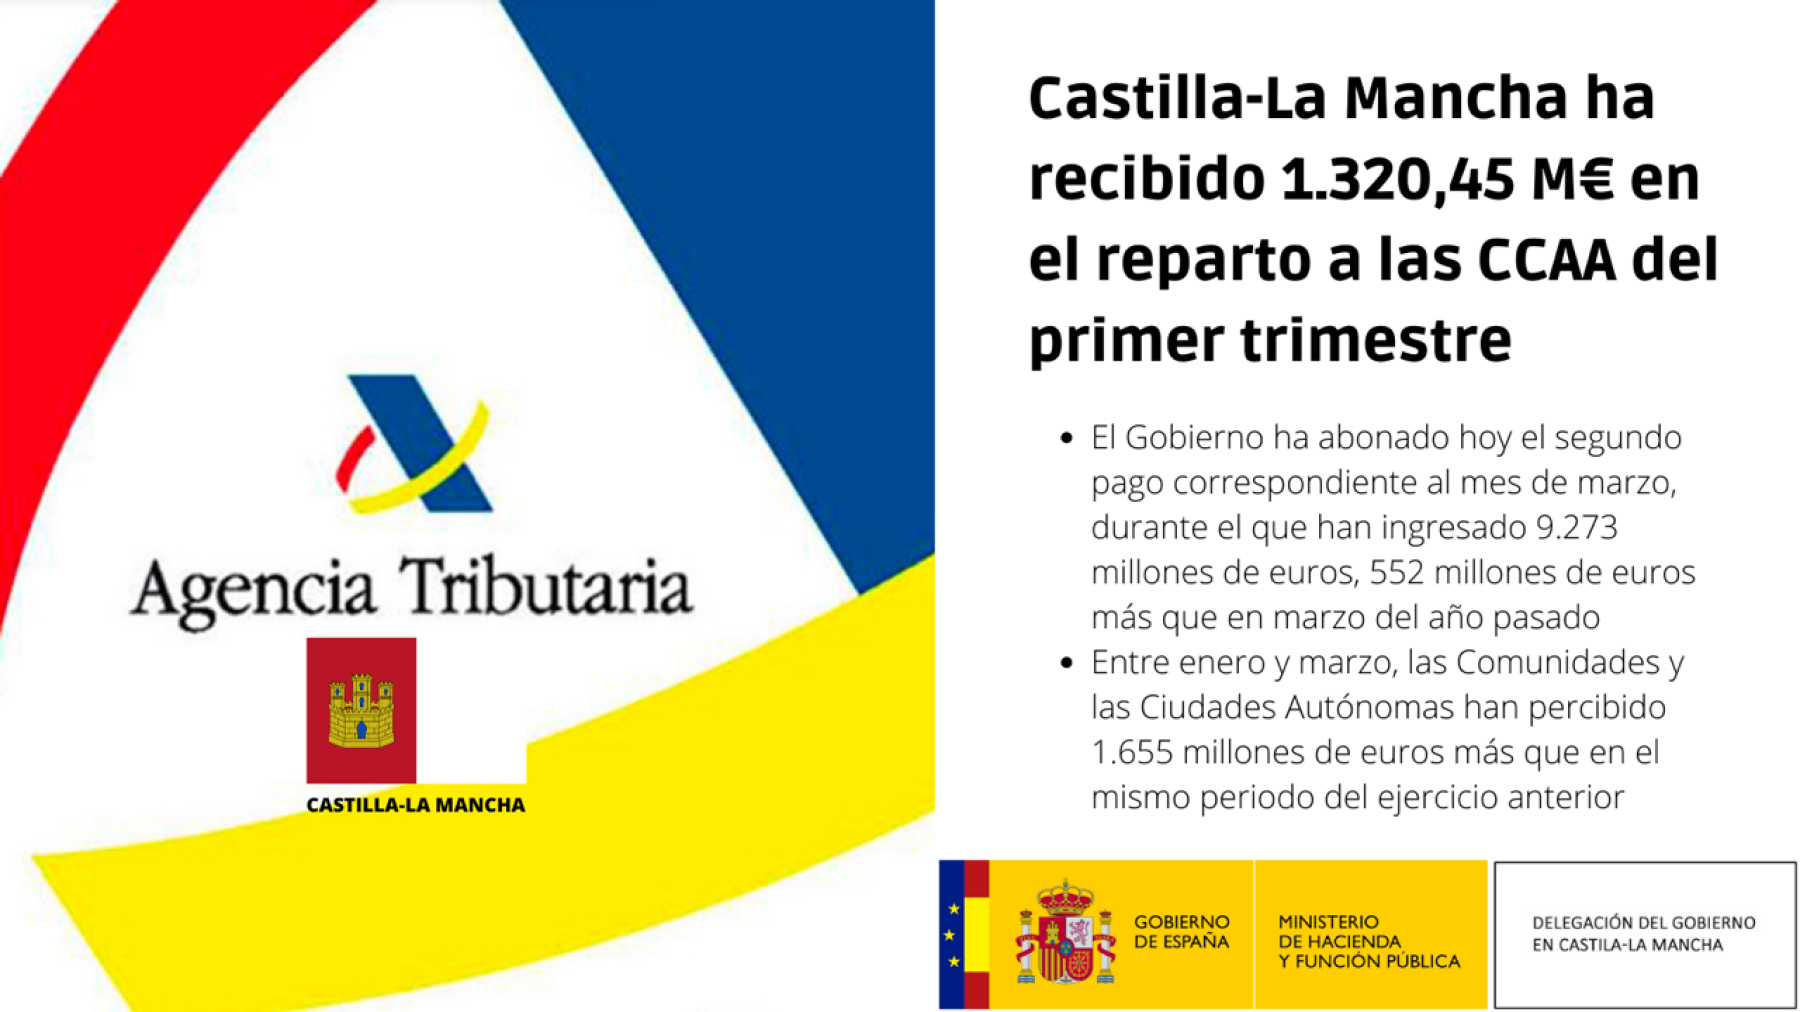 Castilla-La Mancha ha recibido 1.320,45 M€ en el reparto a las CCAA del primer trimestre